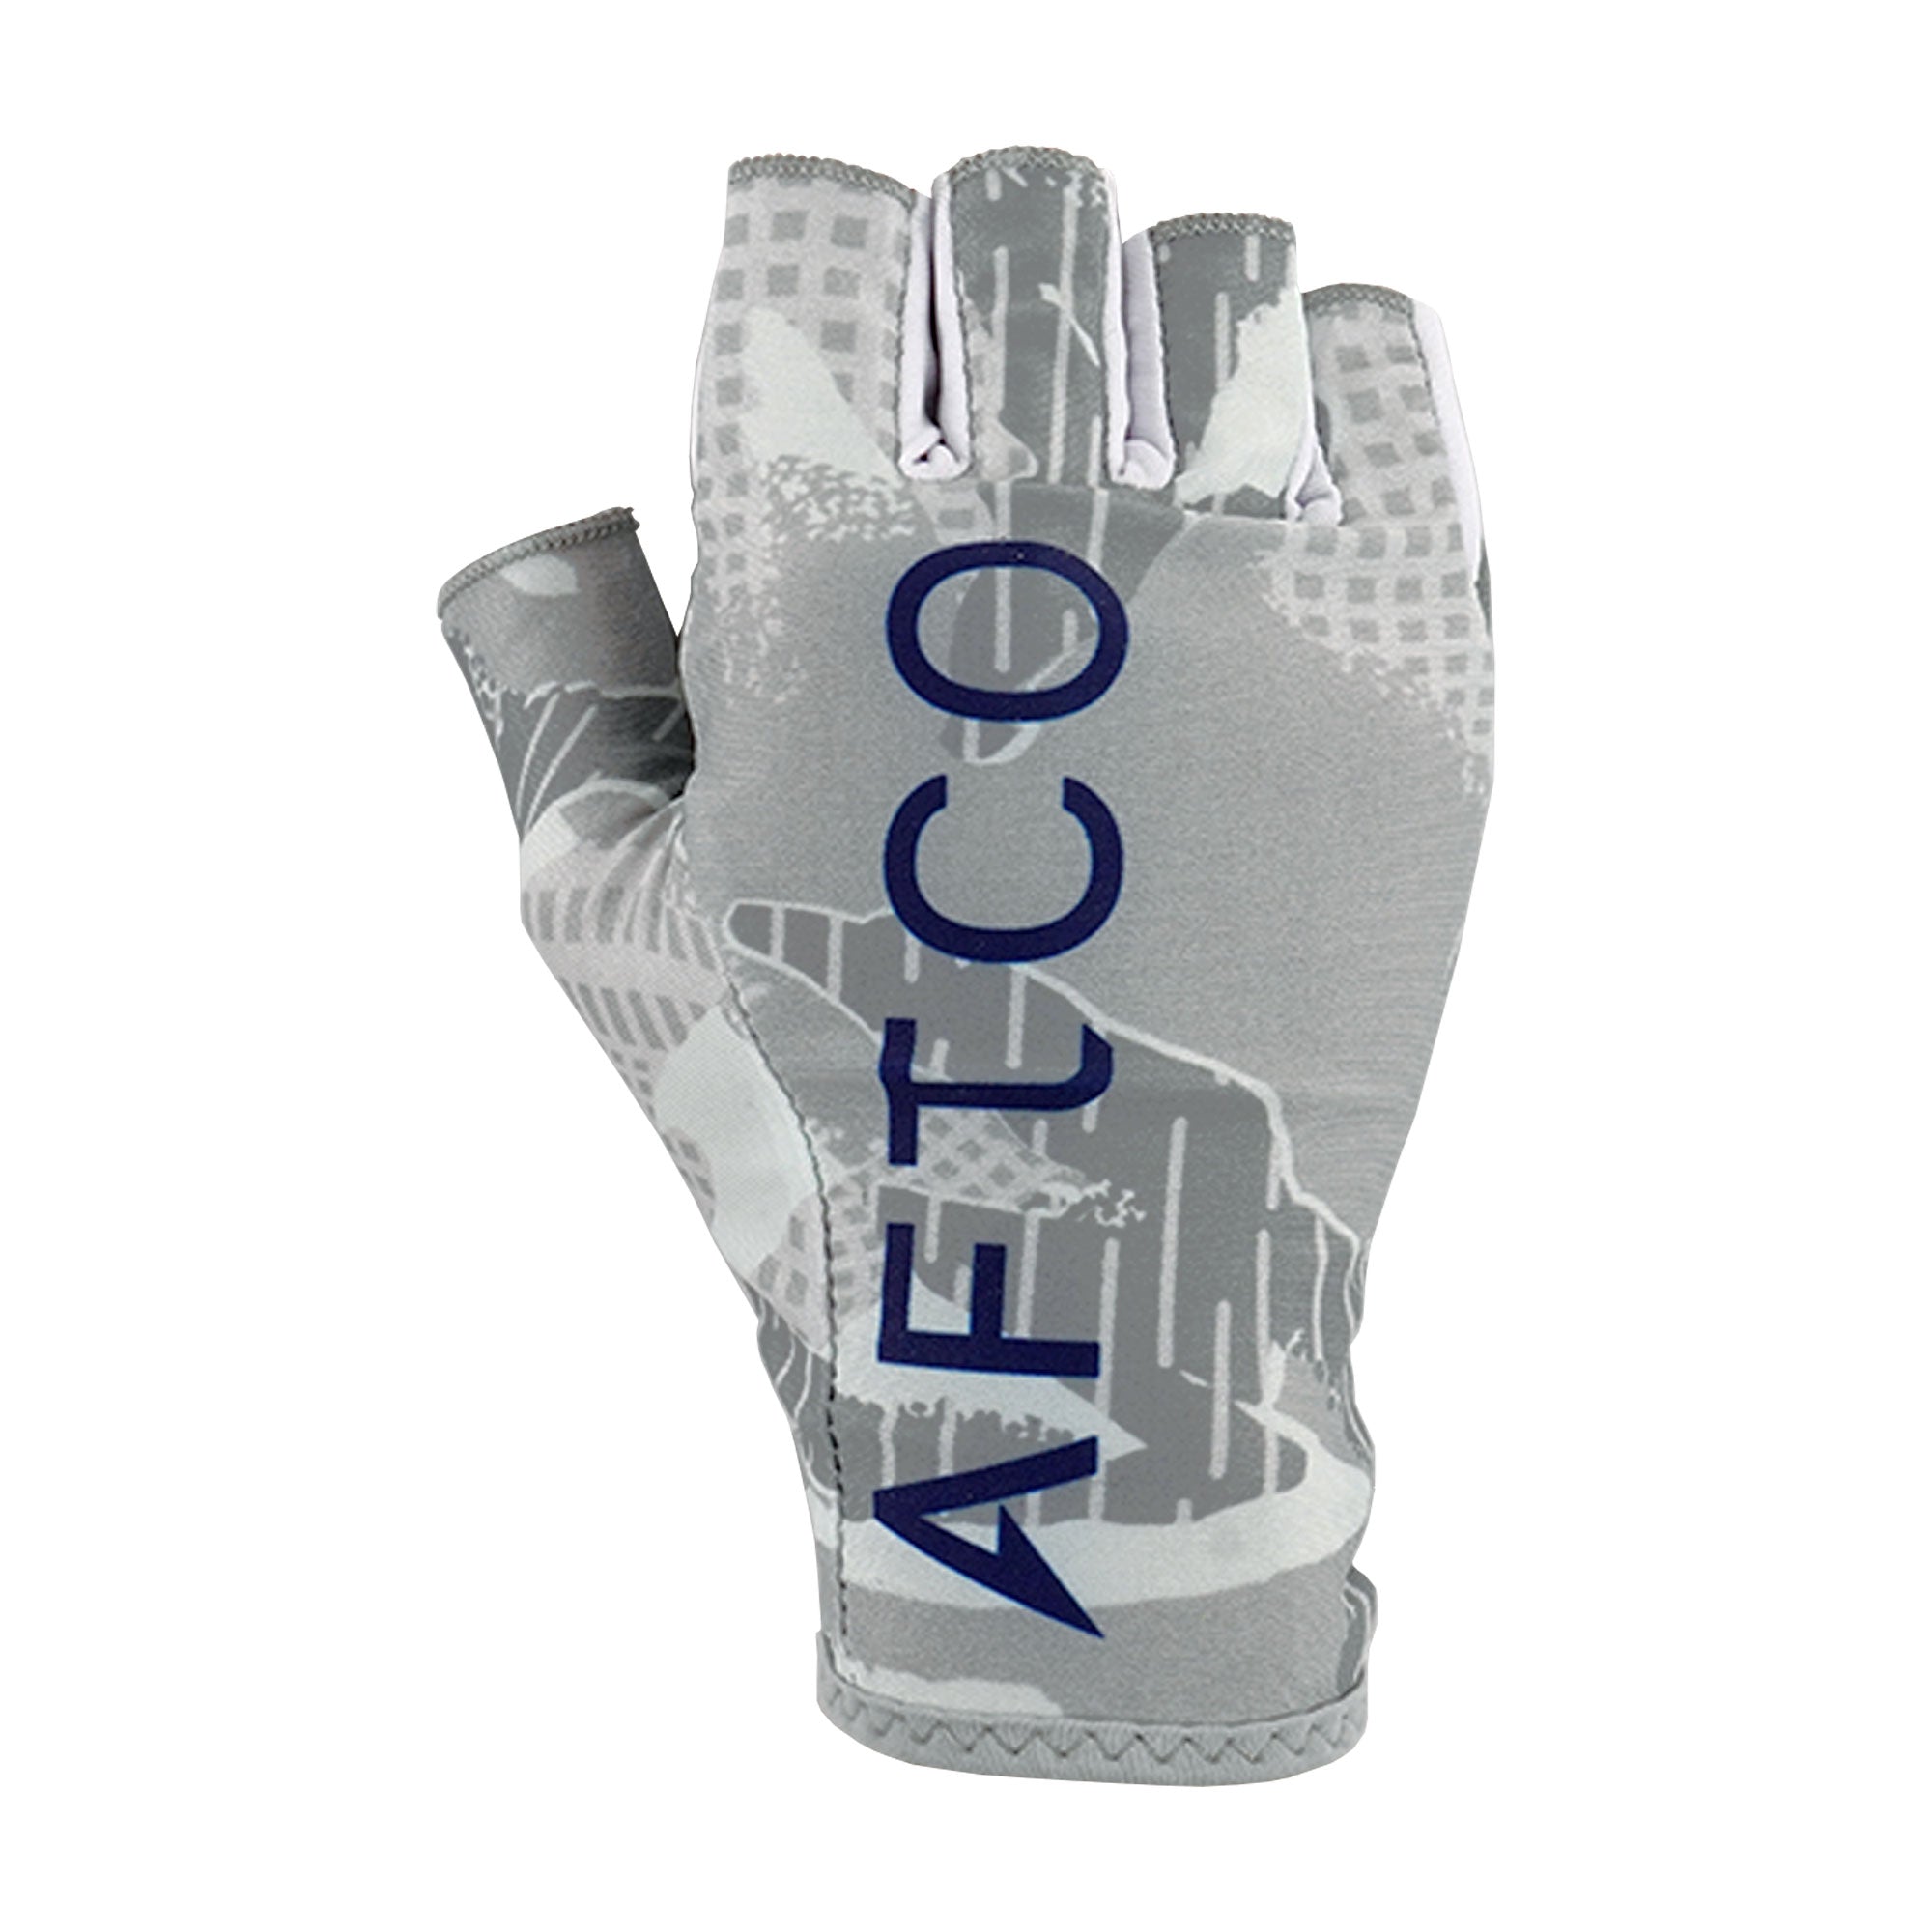 Solblok Gloves – AFTCO